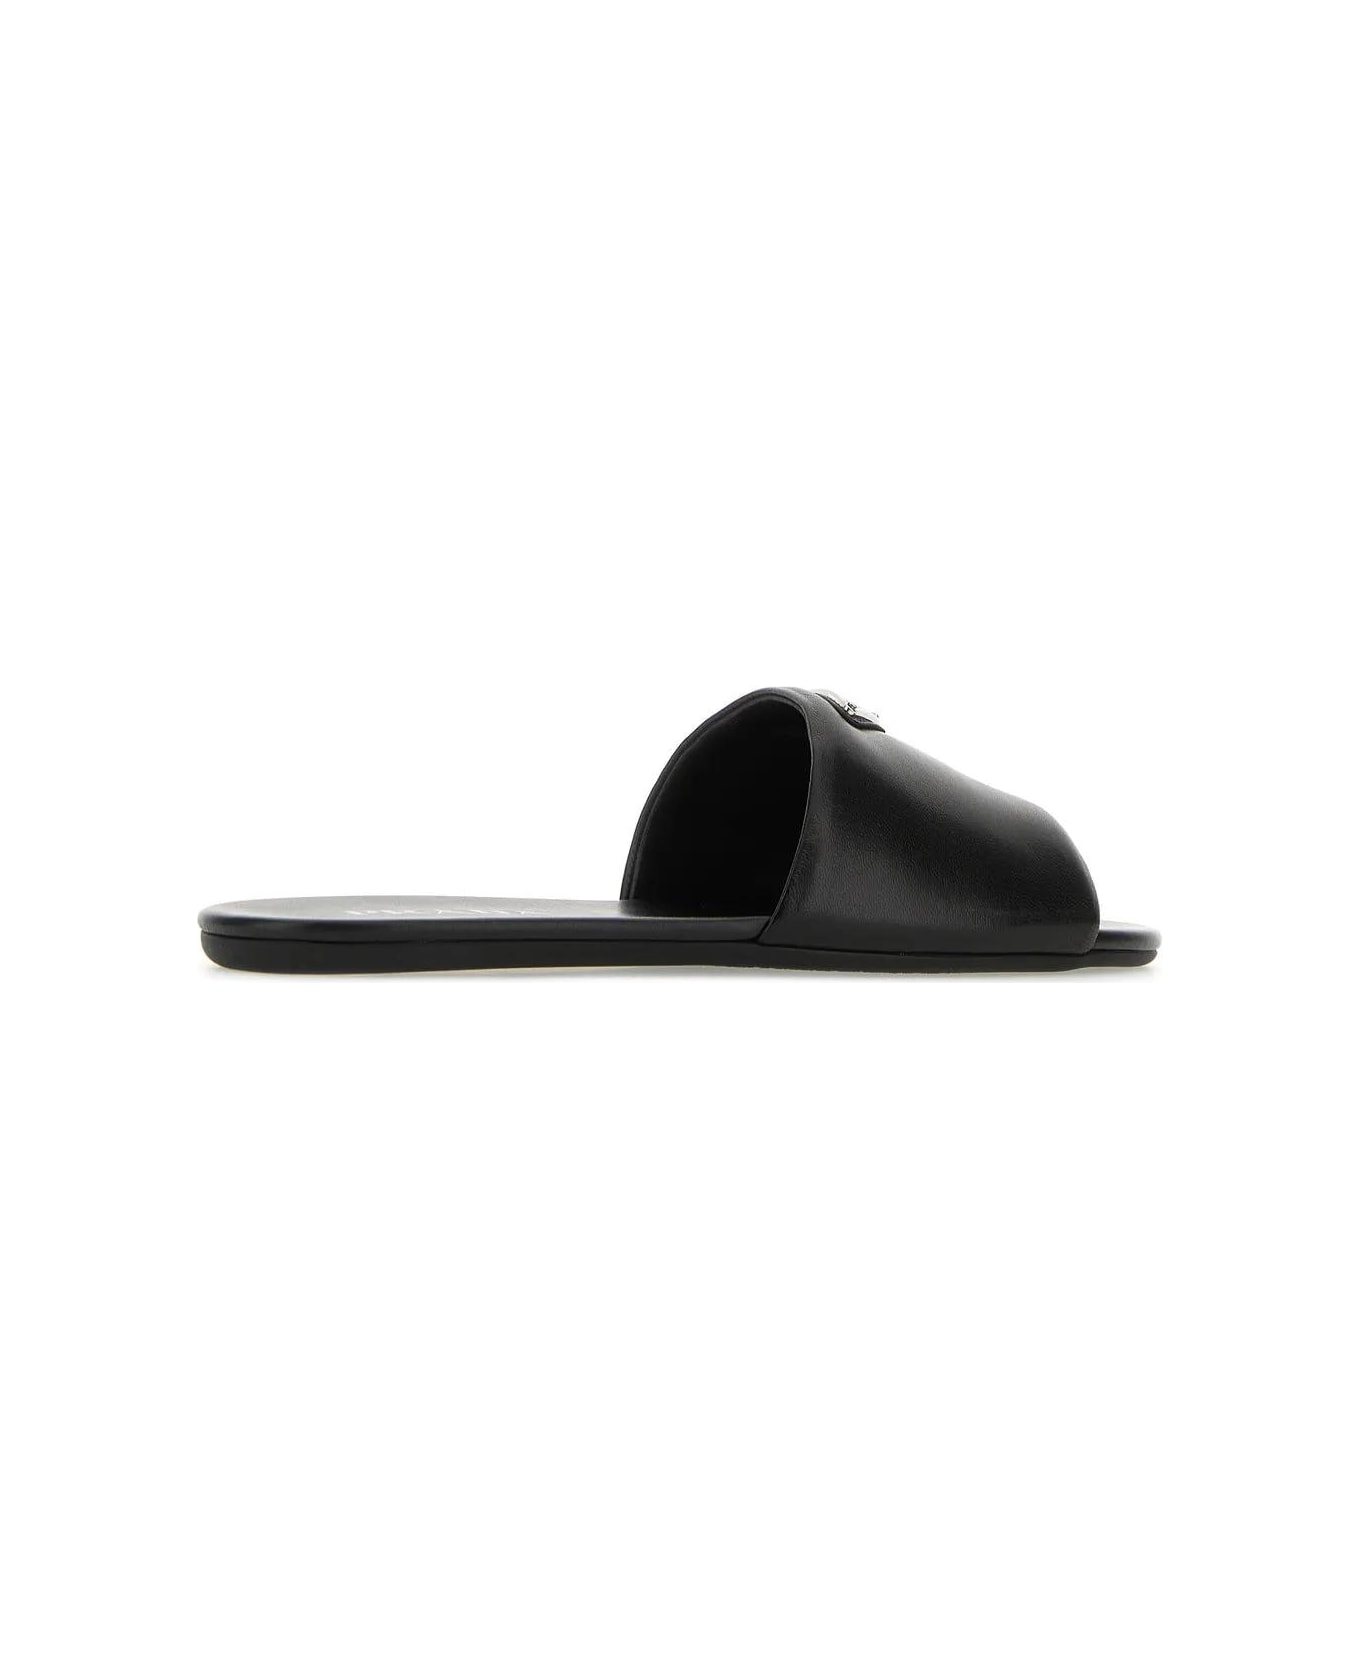 Prada Black Nappa Leather Slippers - NERO サンダル